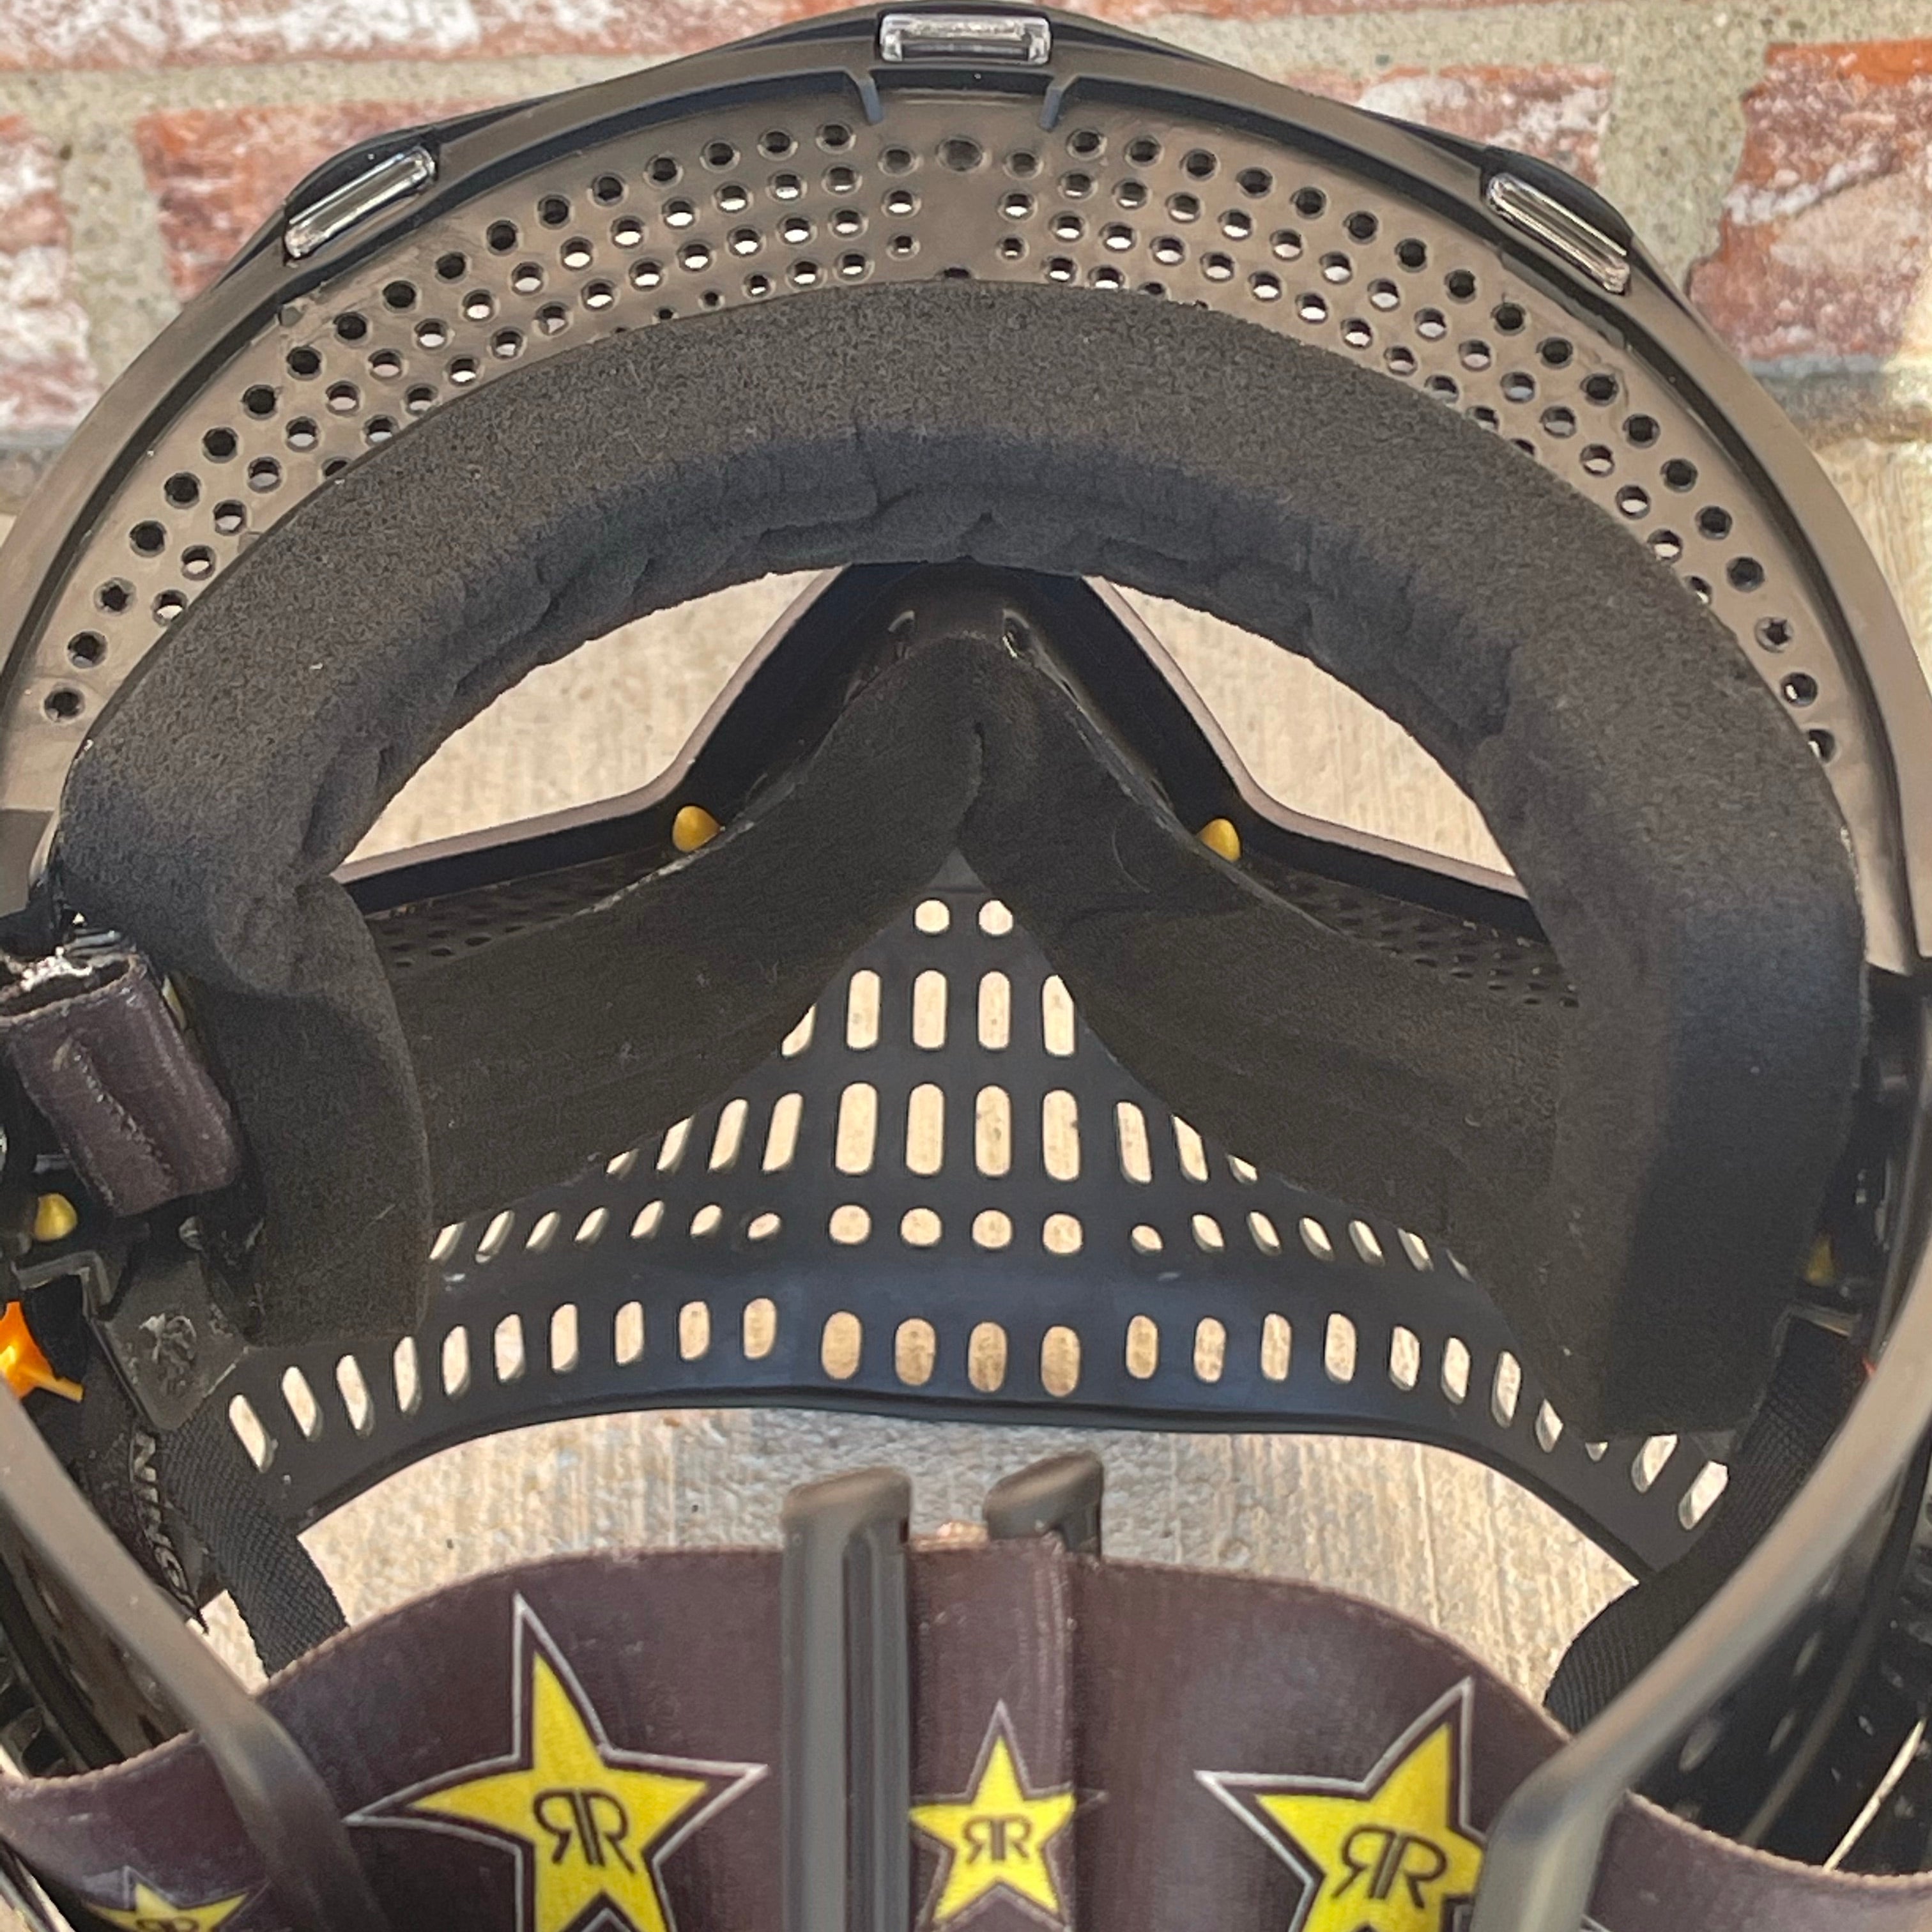 Used JT Proflex Paintball Mask - Rockstar with OG Yellow bottom